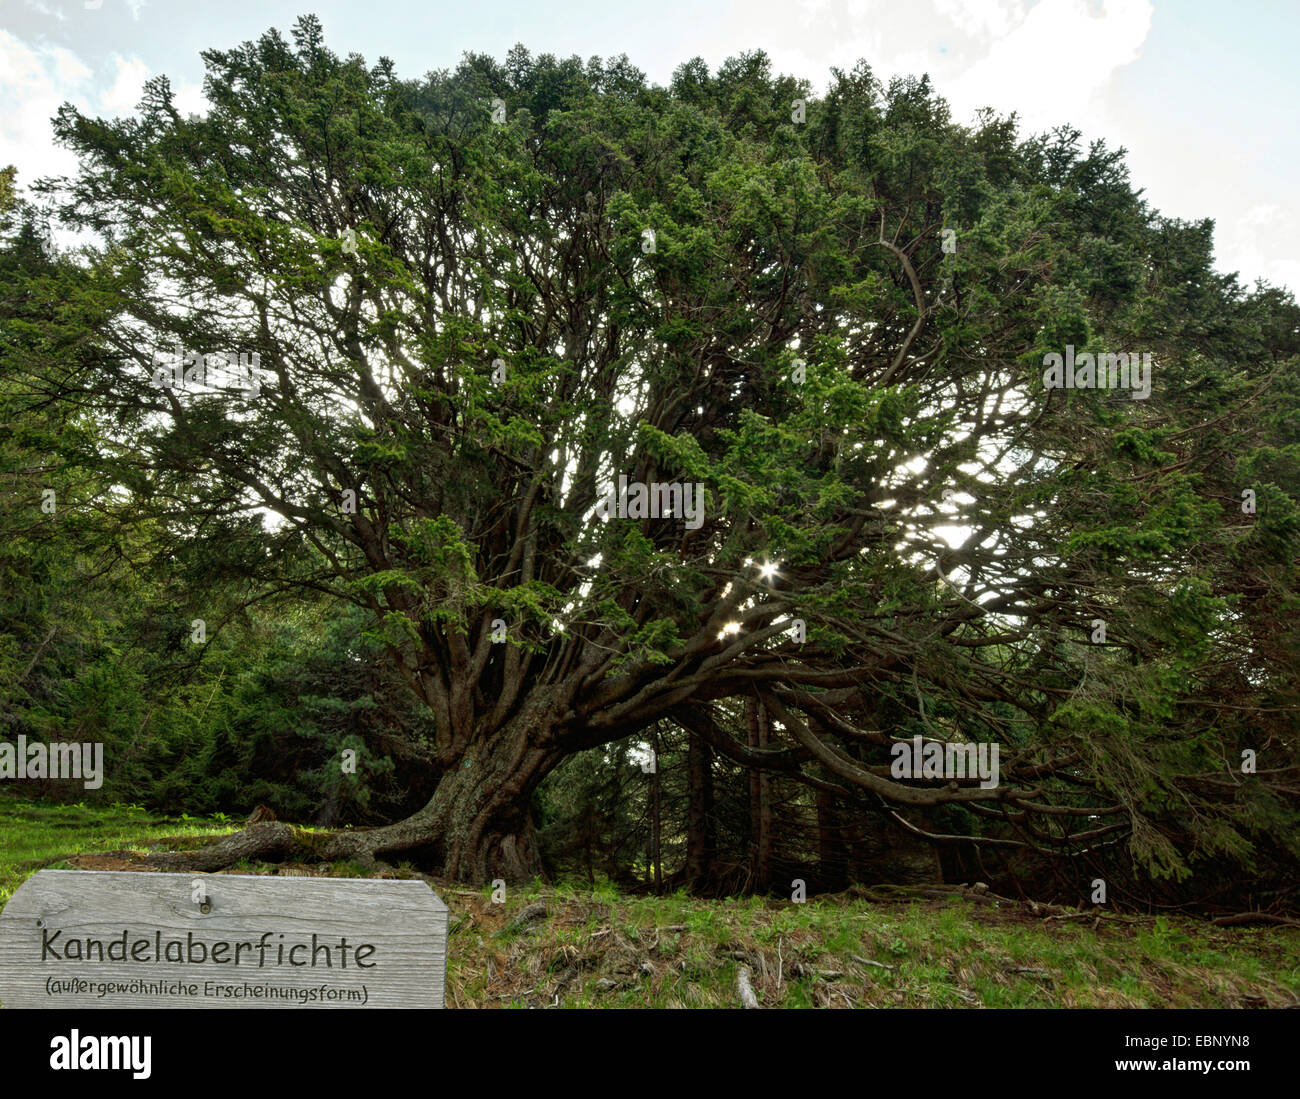 Norway spruce (Picea abies), Kandelaberfichte, form of a spruce, Austria, Kaernten, Nockberge National Park Stock Photo